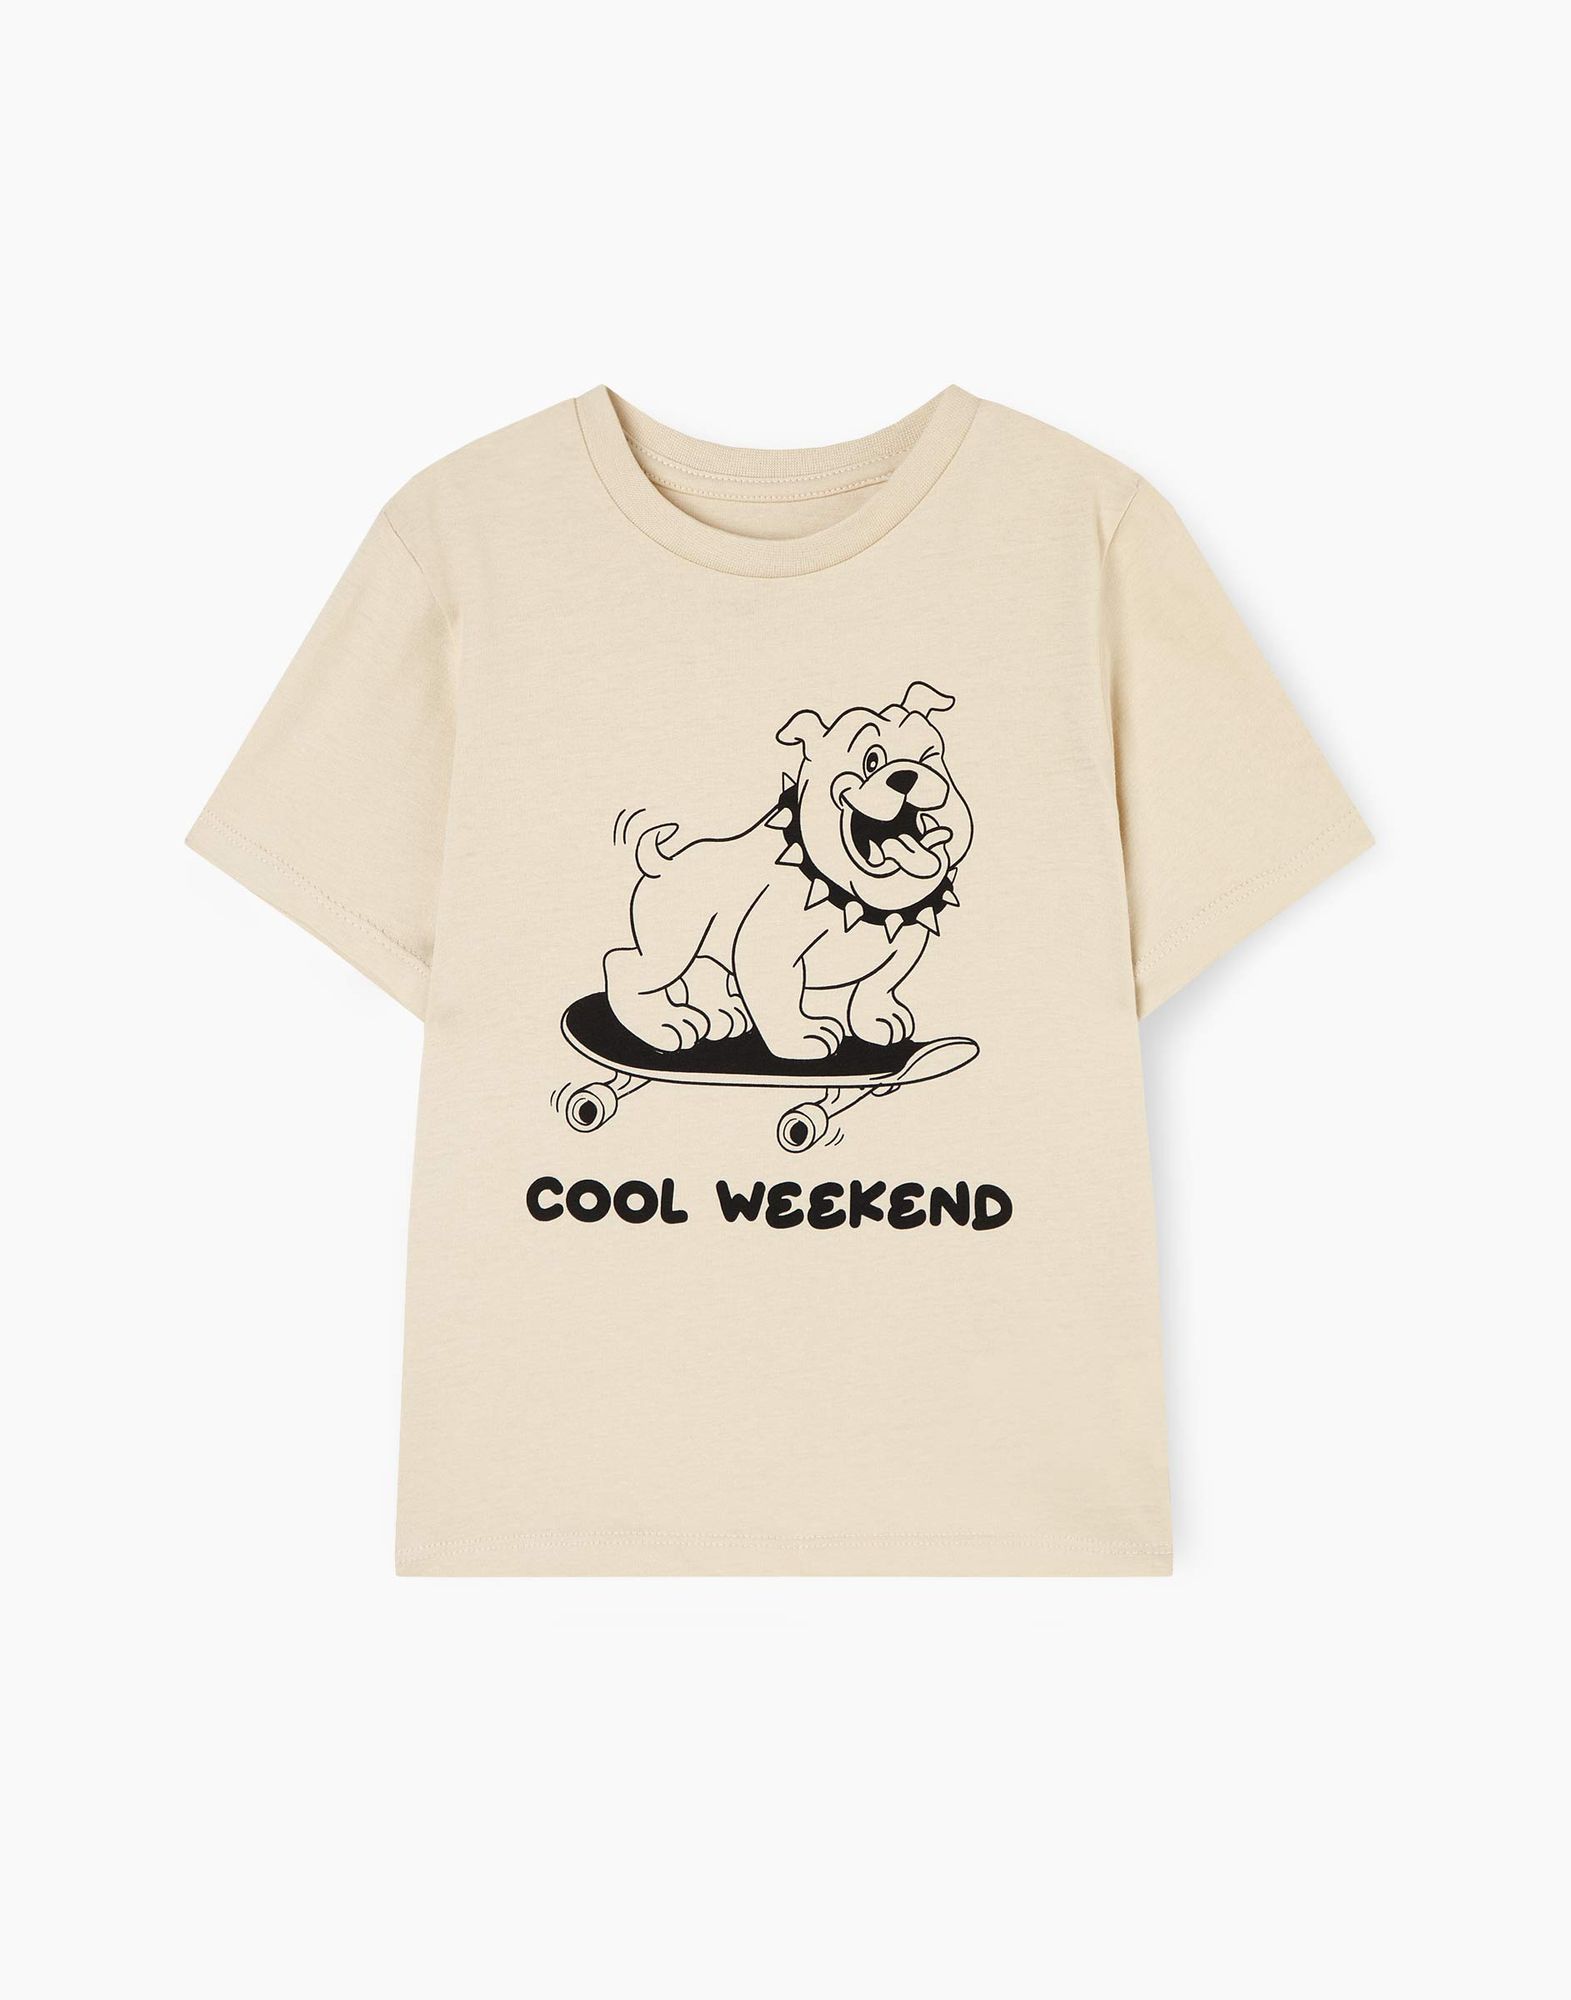 Бежевая футболка с надписью Cool weekend для мальчика-1